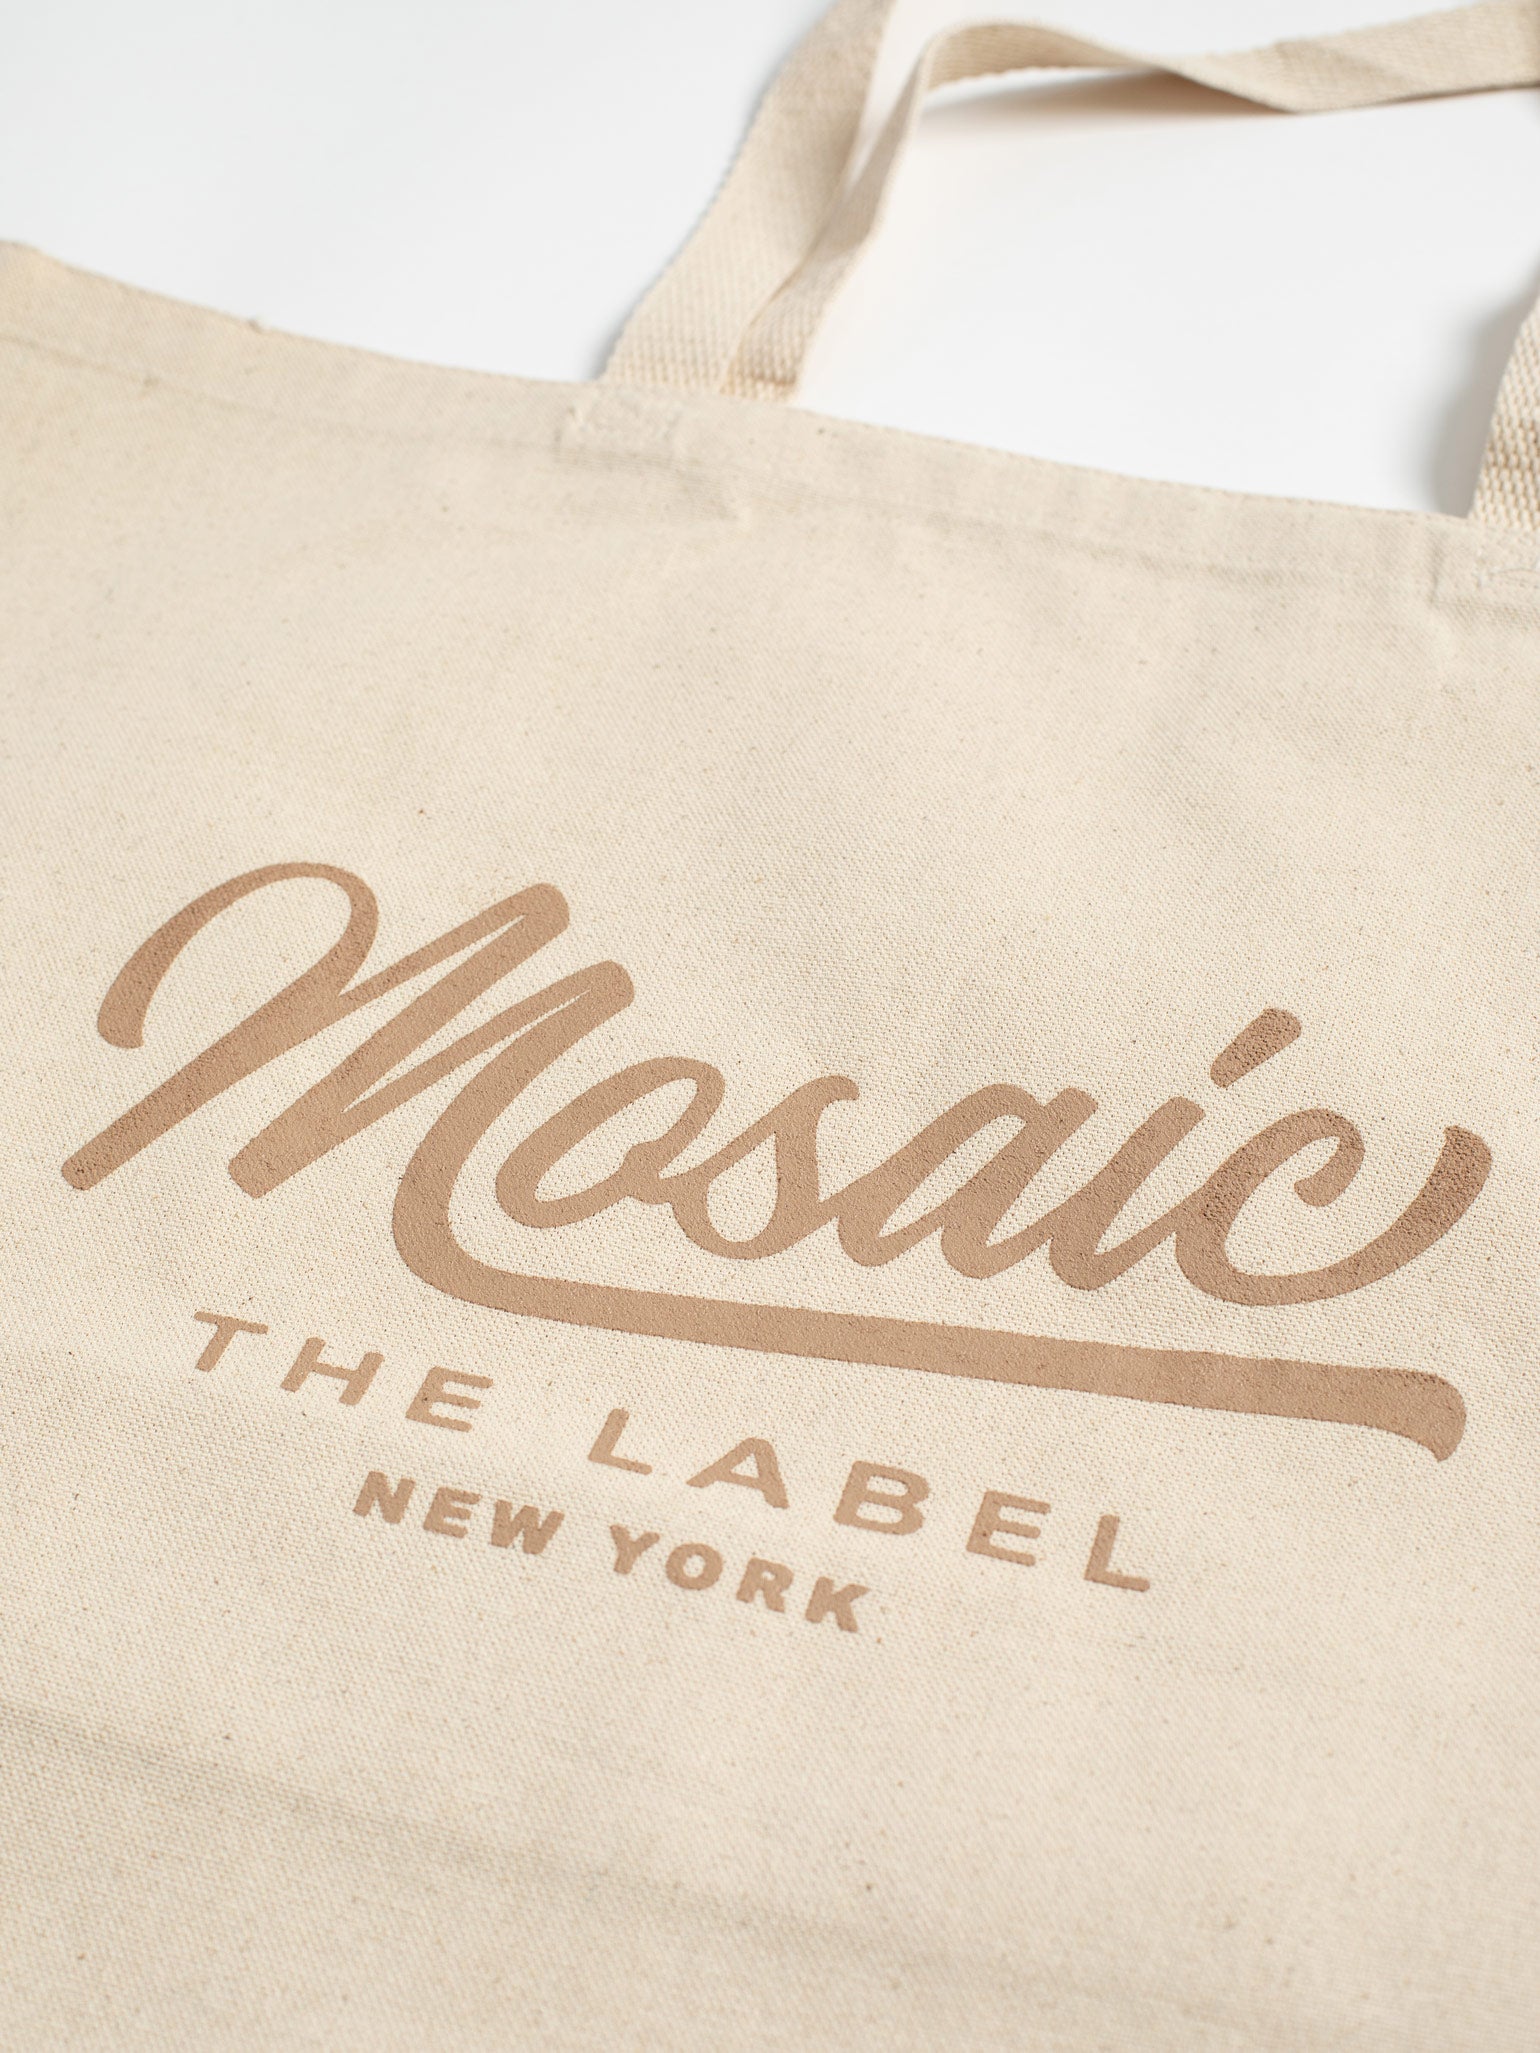 Mosaic 100% Cotton Tote Bag - Mosaic the Label